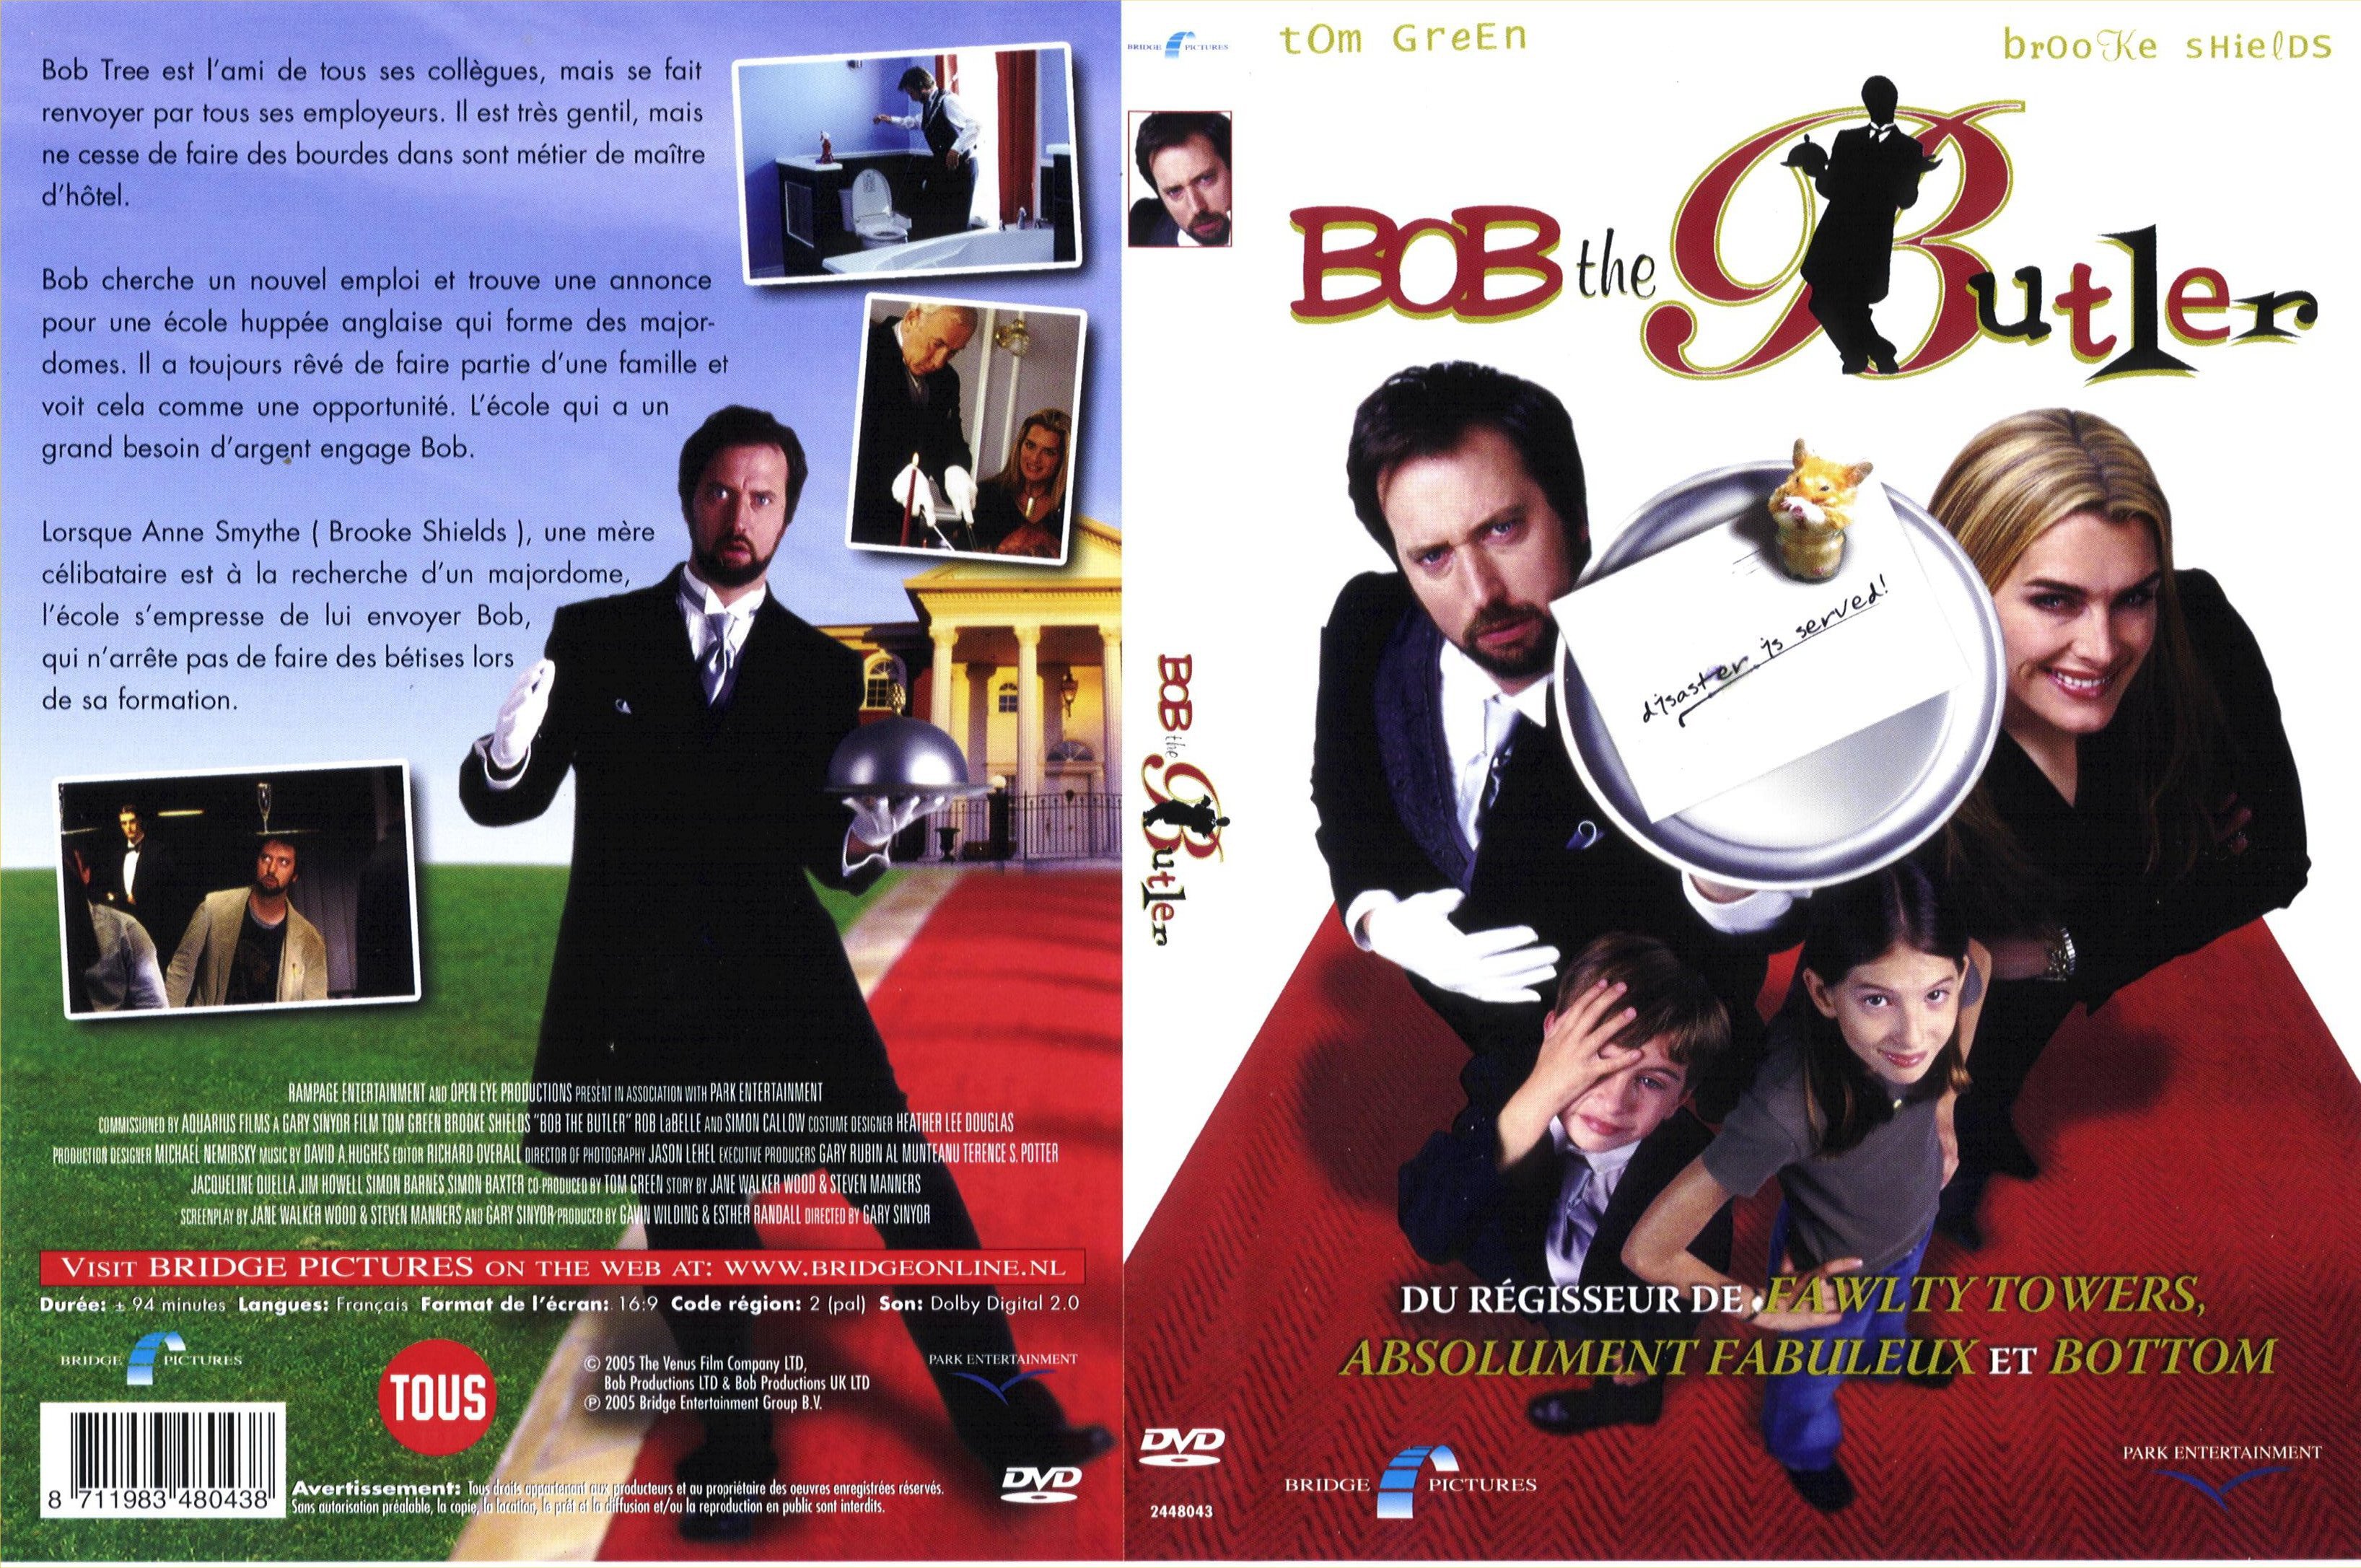 Jaquette DVD Bob the butler